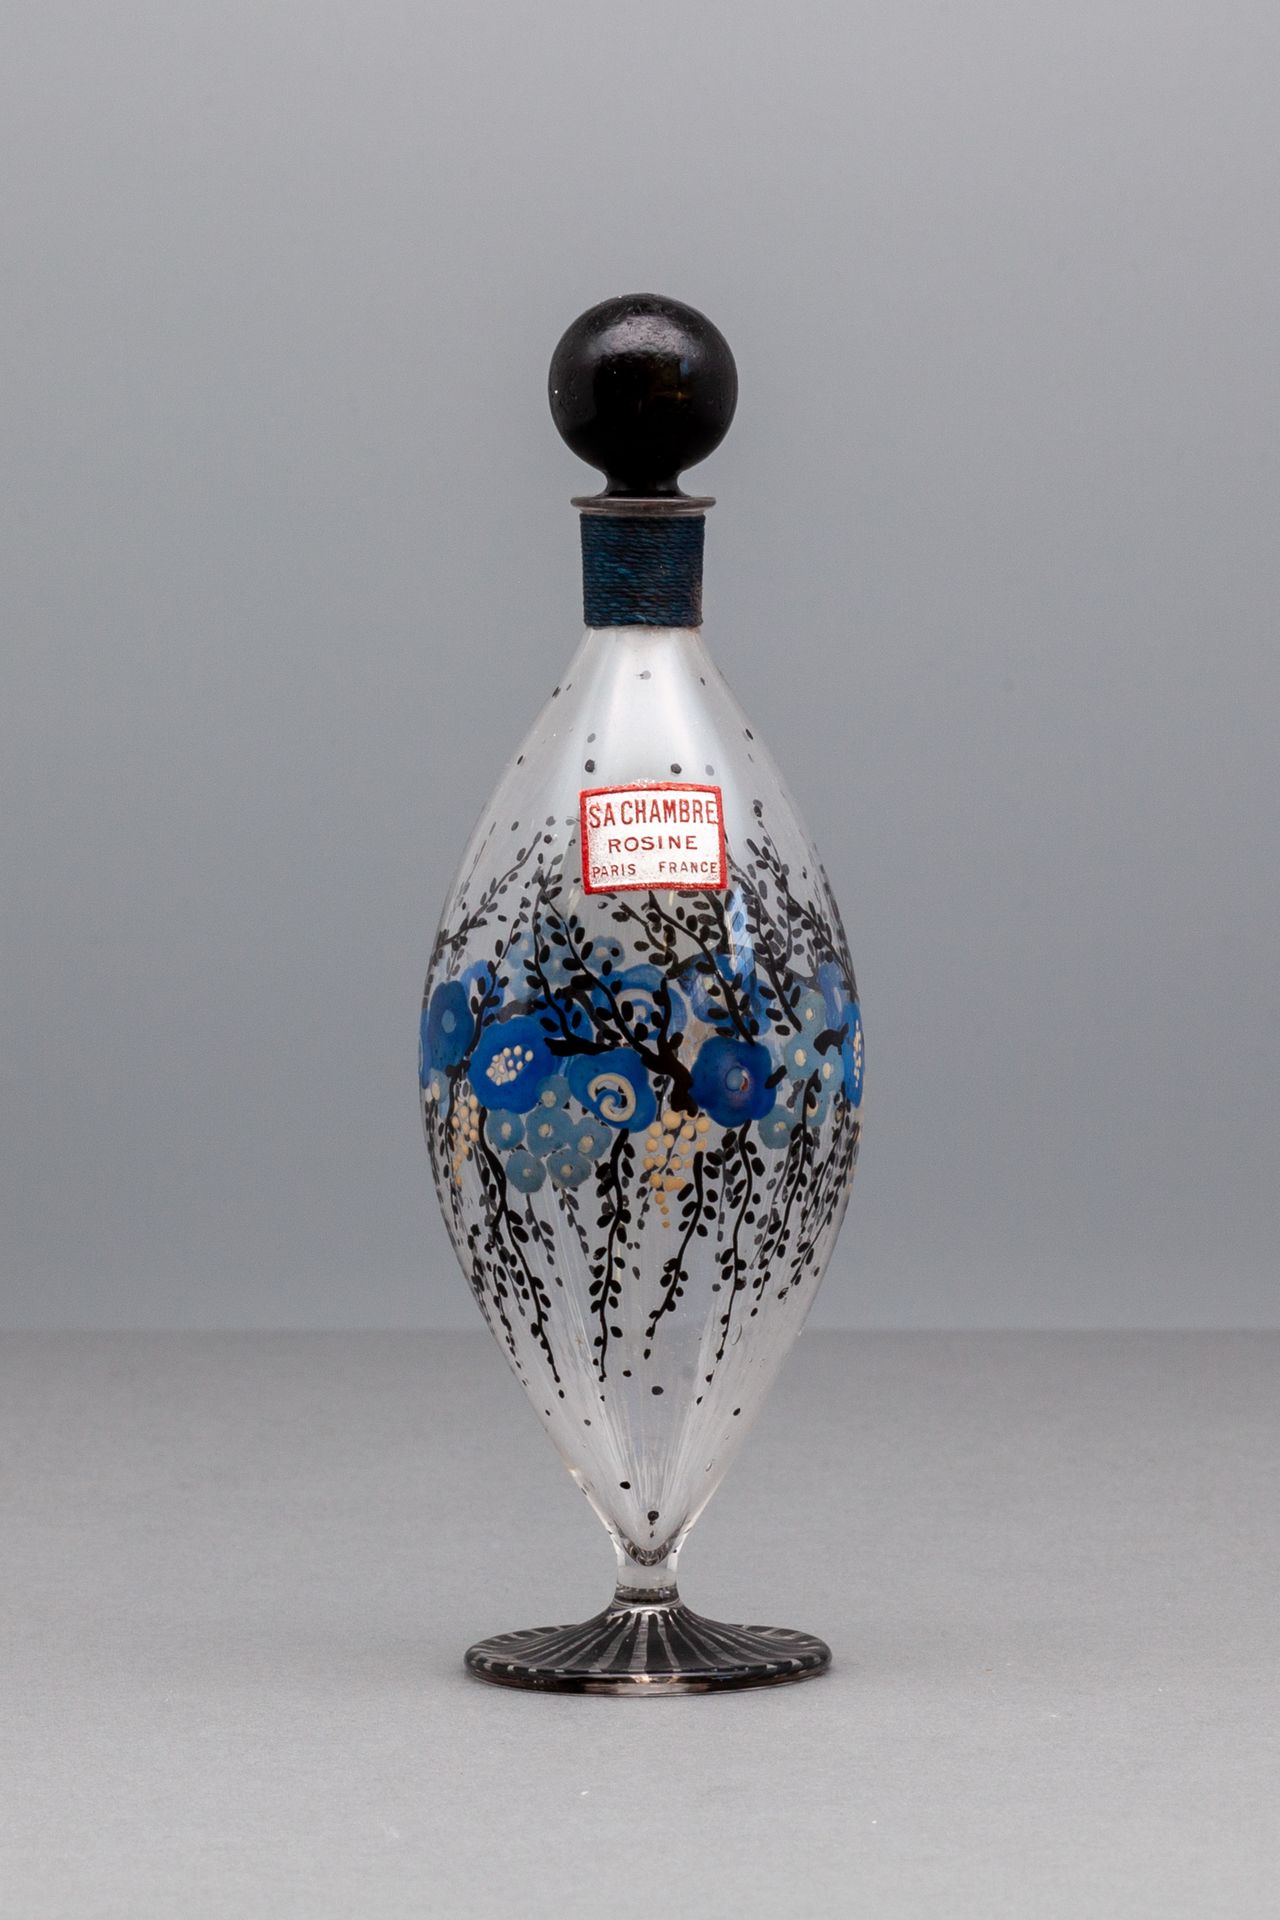 ROSINE" SA CHAMBRE" 玻璃香水瓶，装饰有蓝色和灰色的半花。黑色球塞。标题为 "SA CHAMBRE"。高15.5厘米